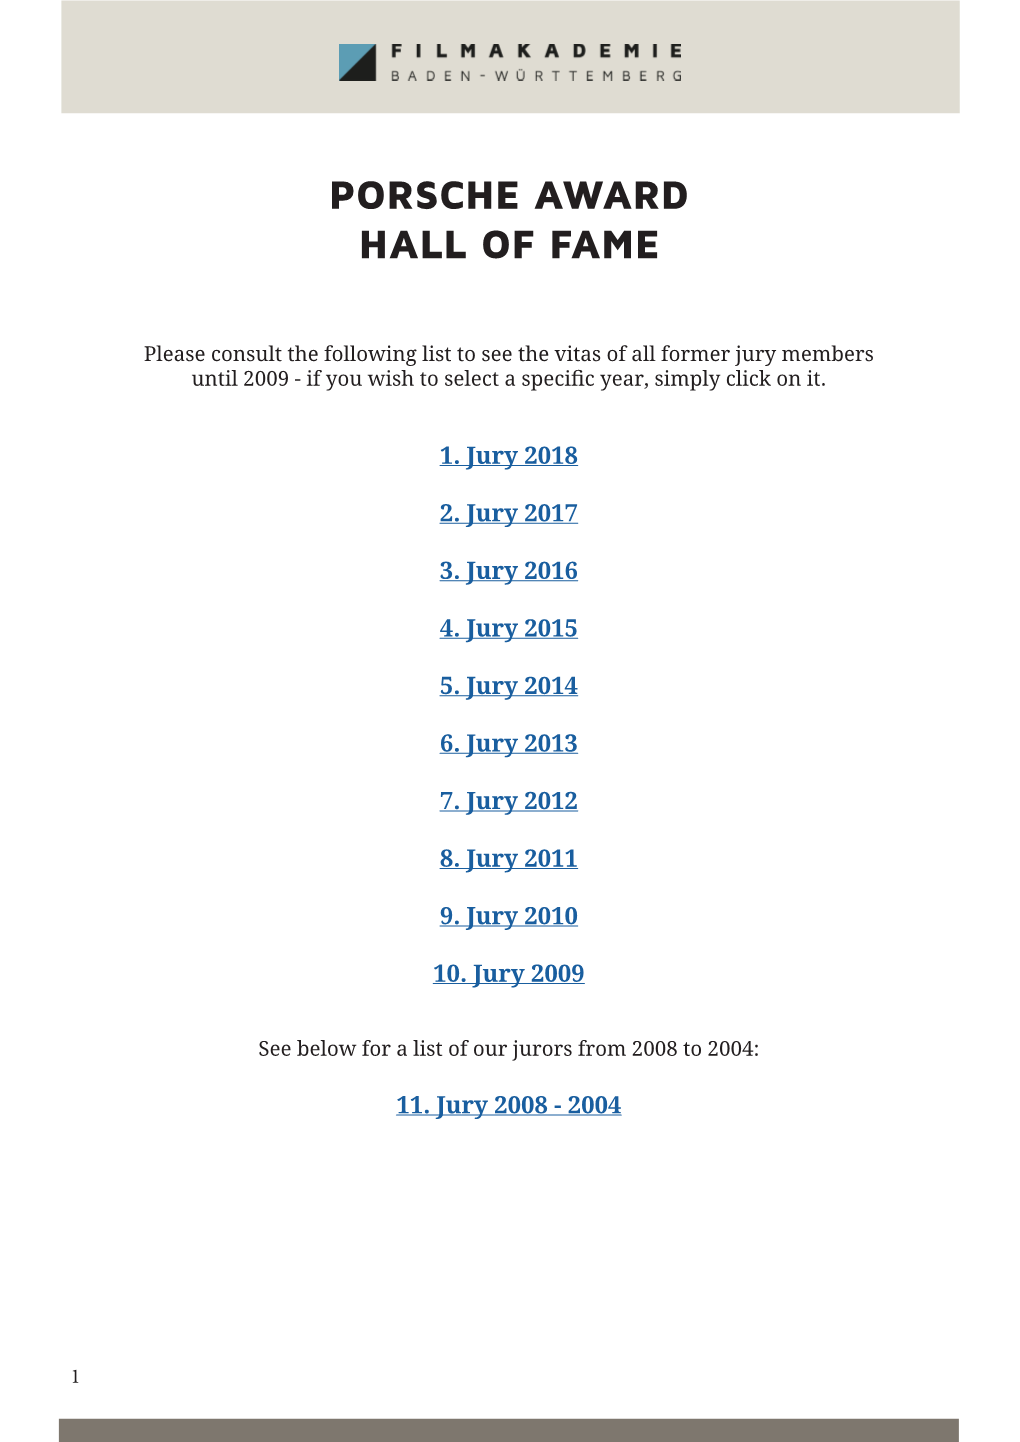 Porsche Award Hall of Fame